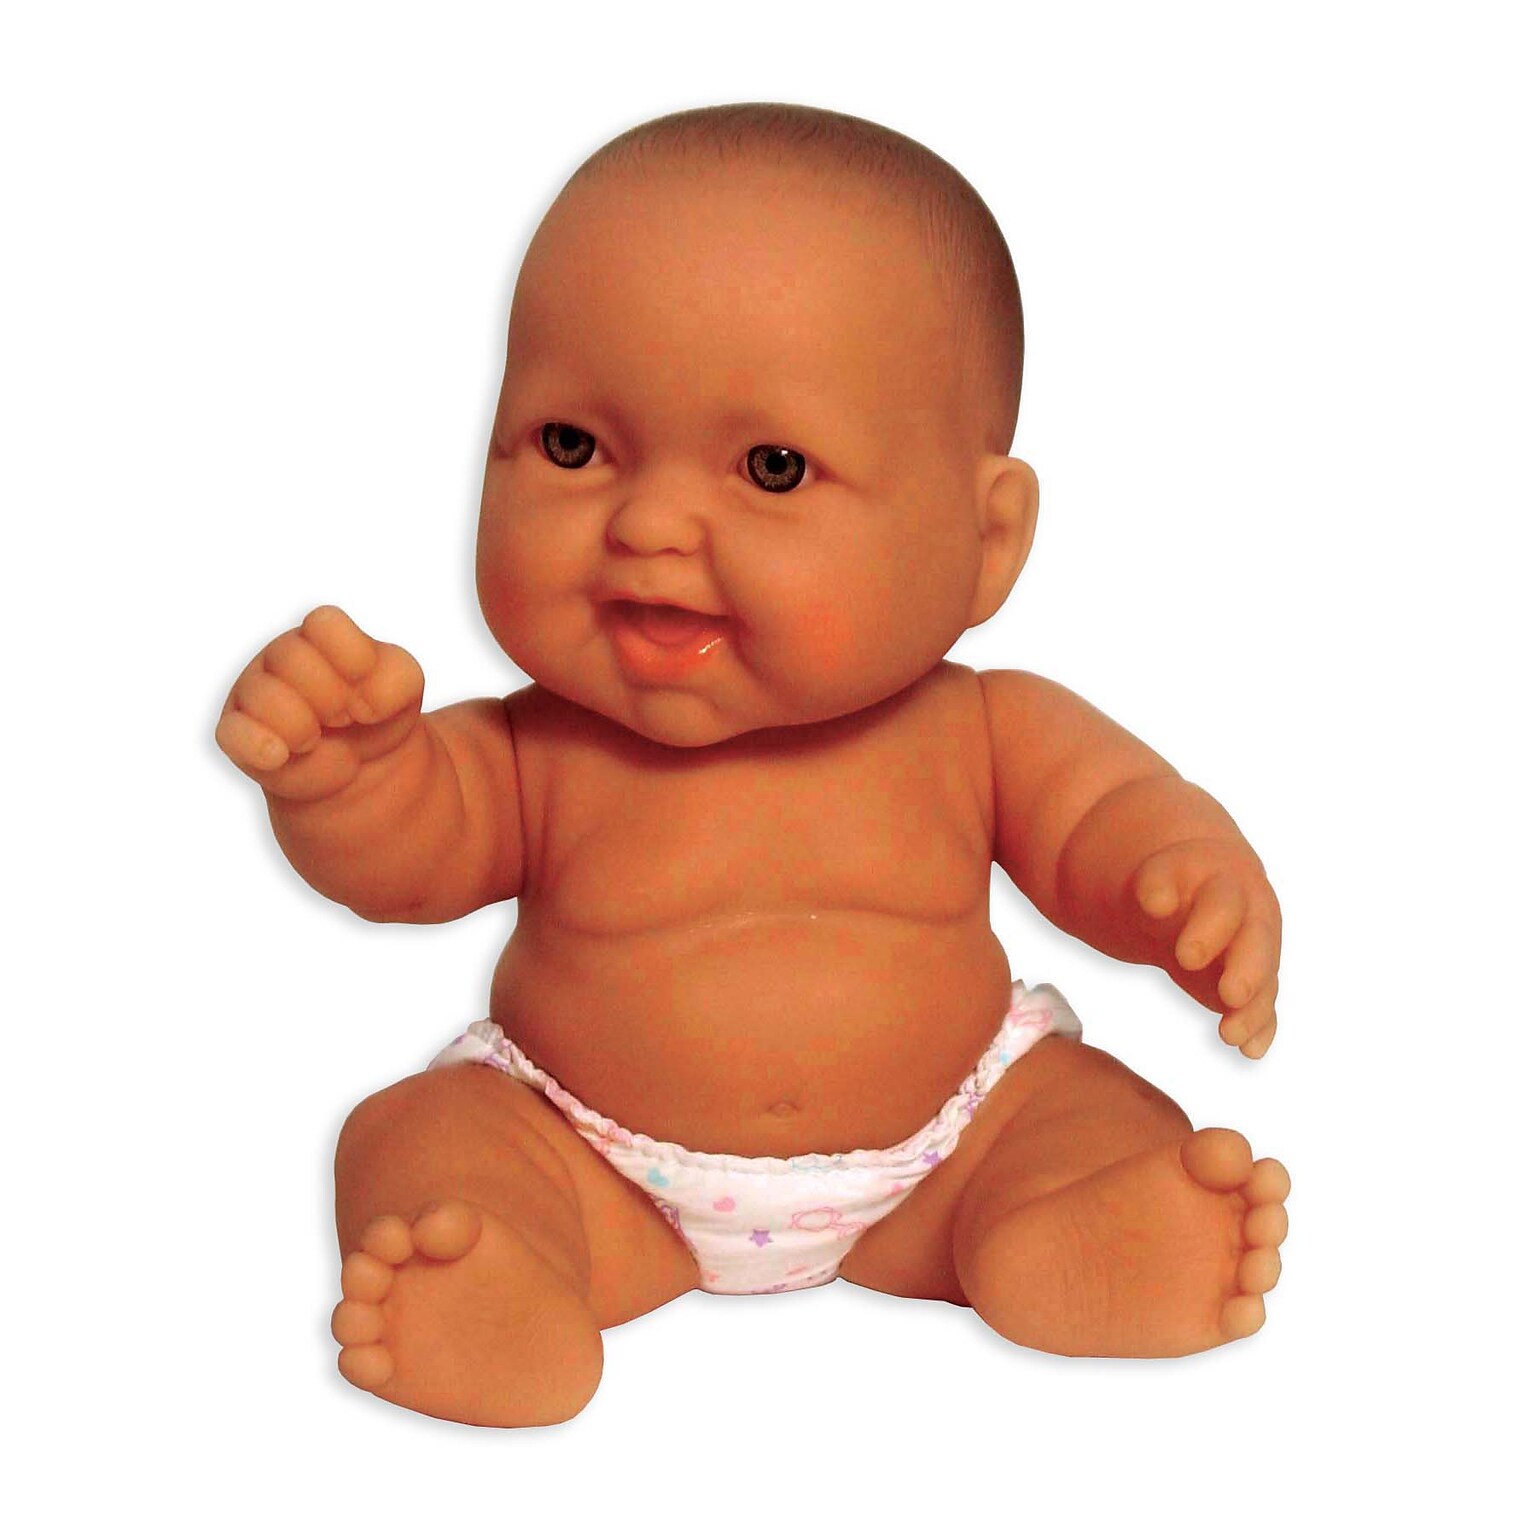 Jc Toys Group® Vinyl 10 Lots to Love® Baby Doll, Hispanic Baby (BER16530)